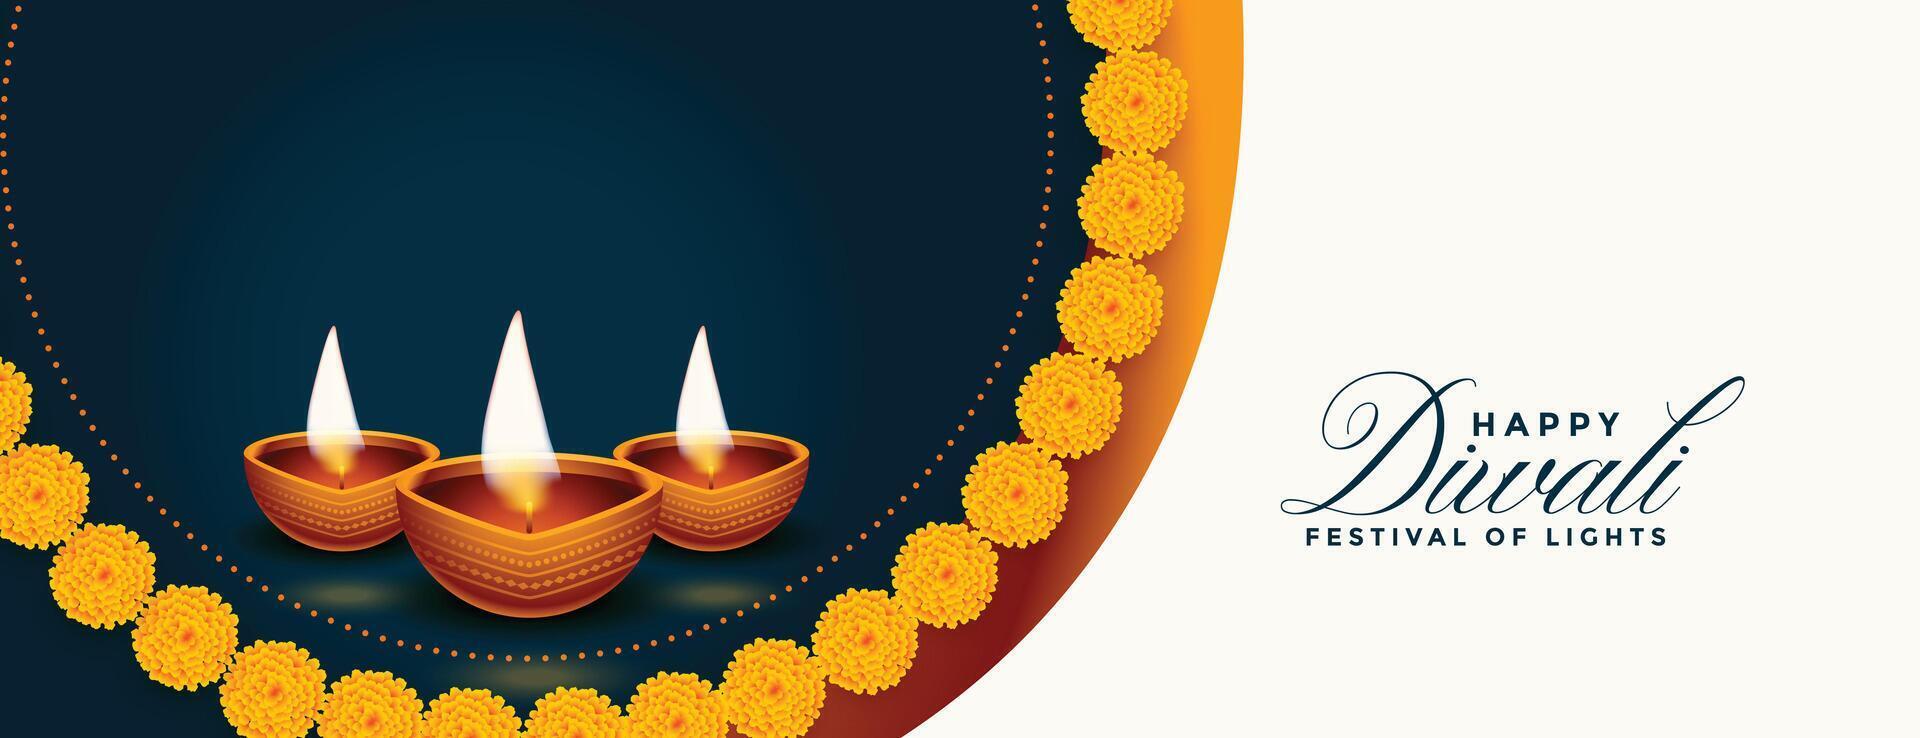 traditionell Hindu Diwali Festival Banner Design vektor